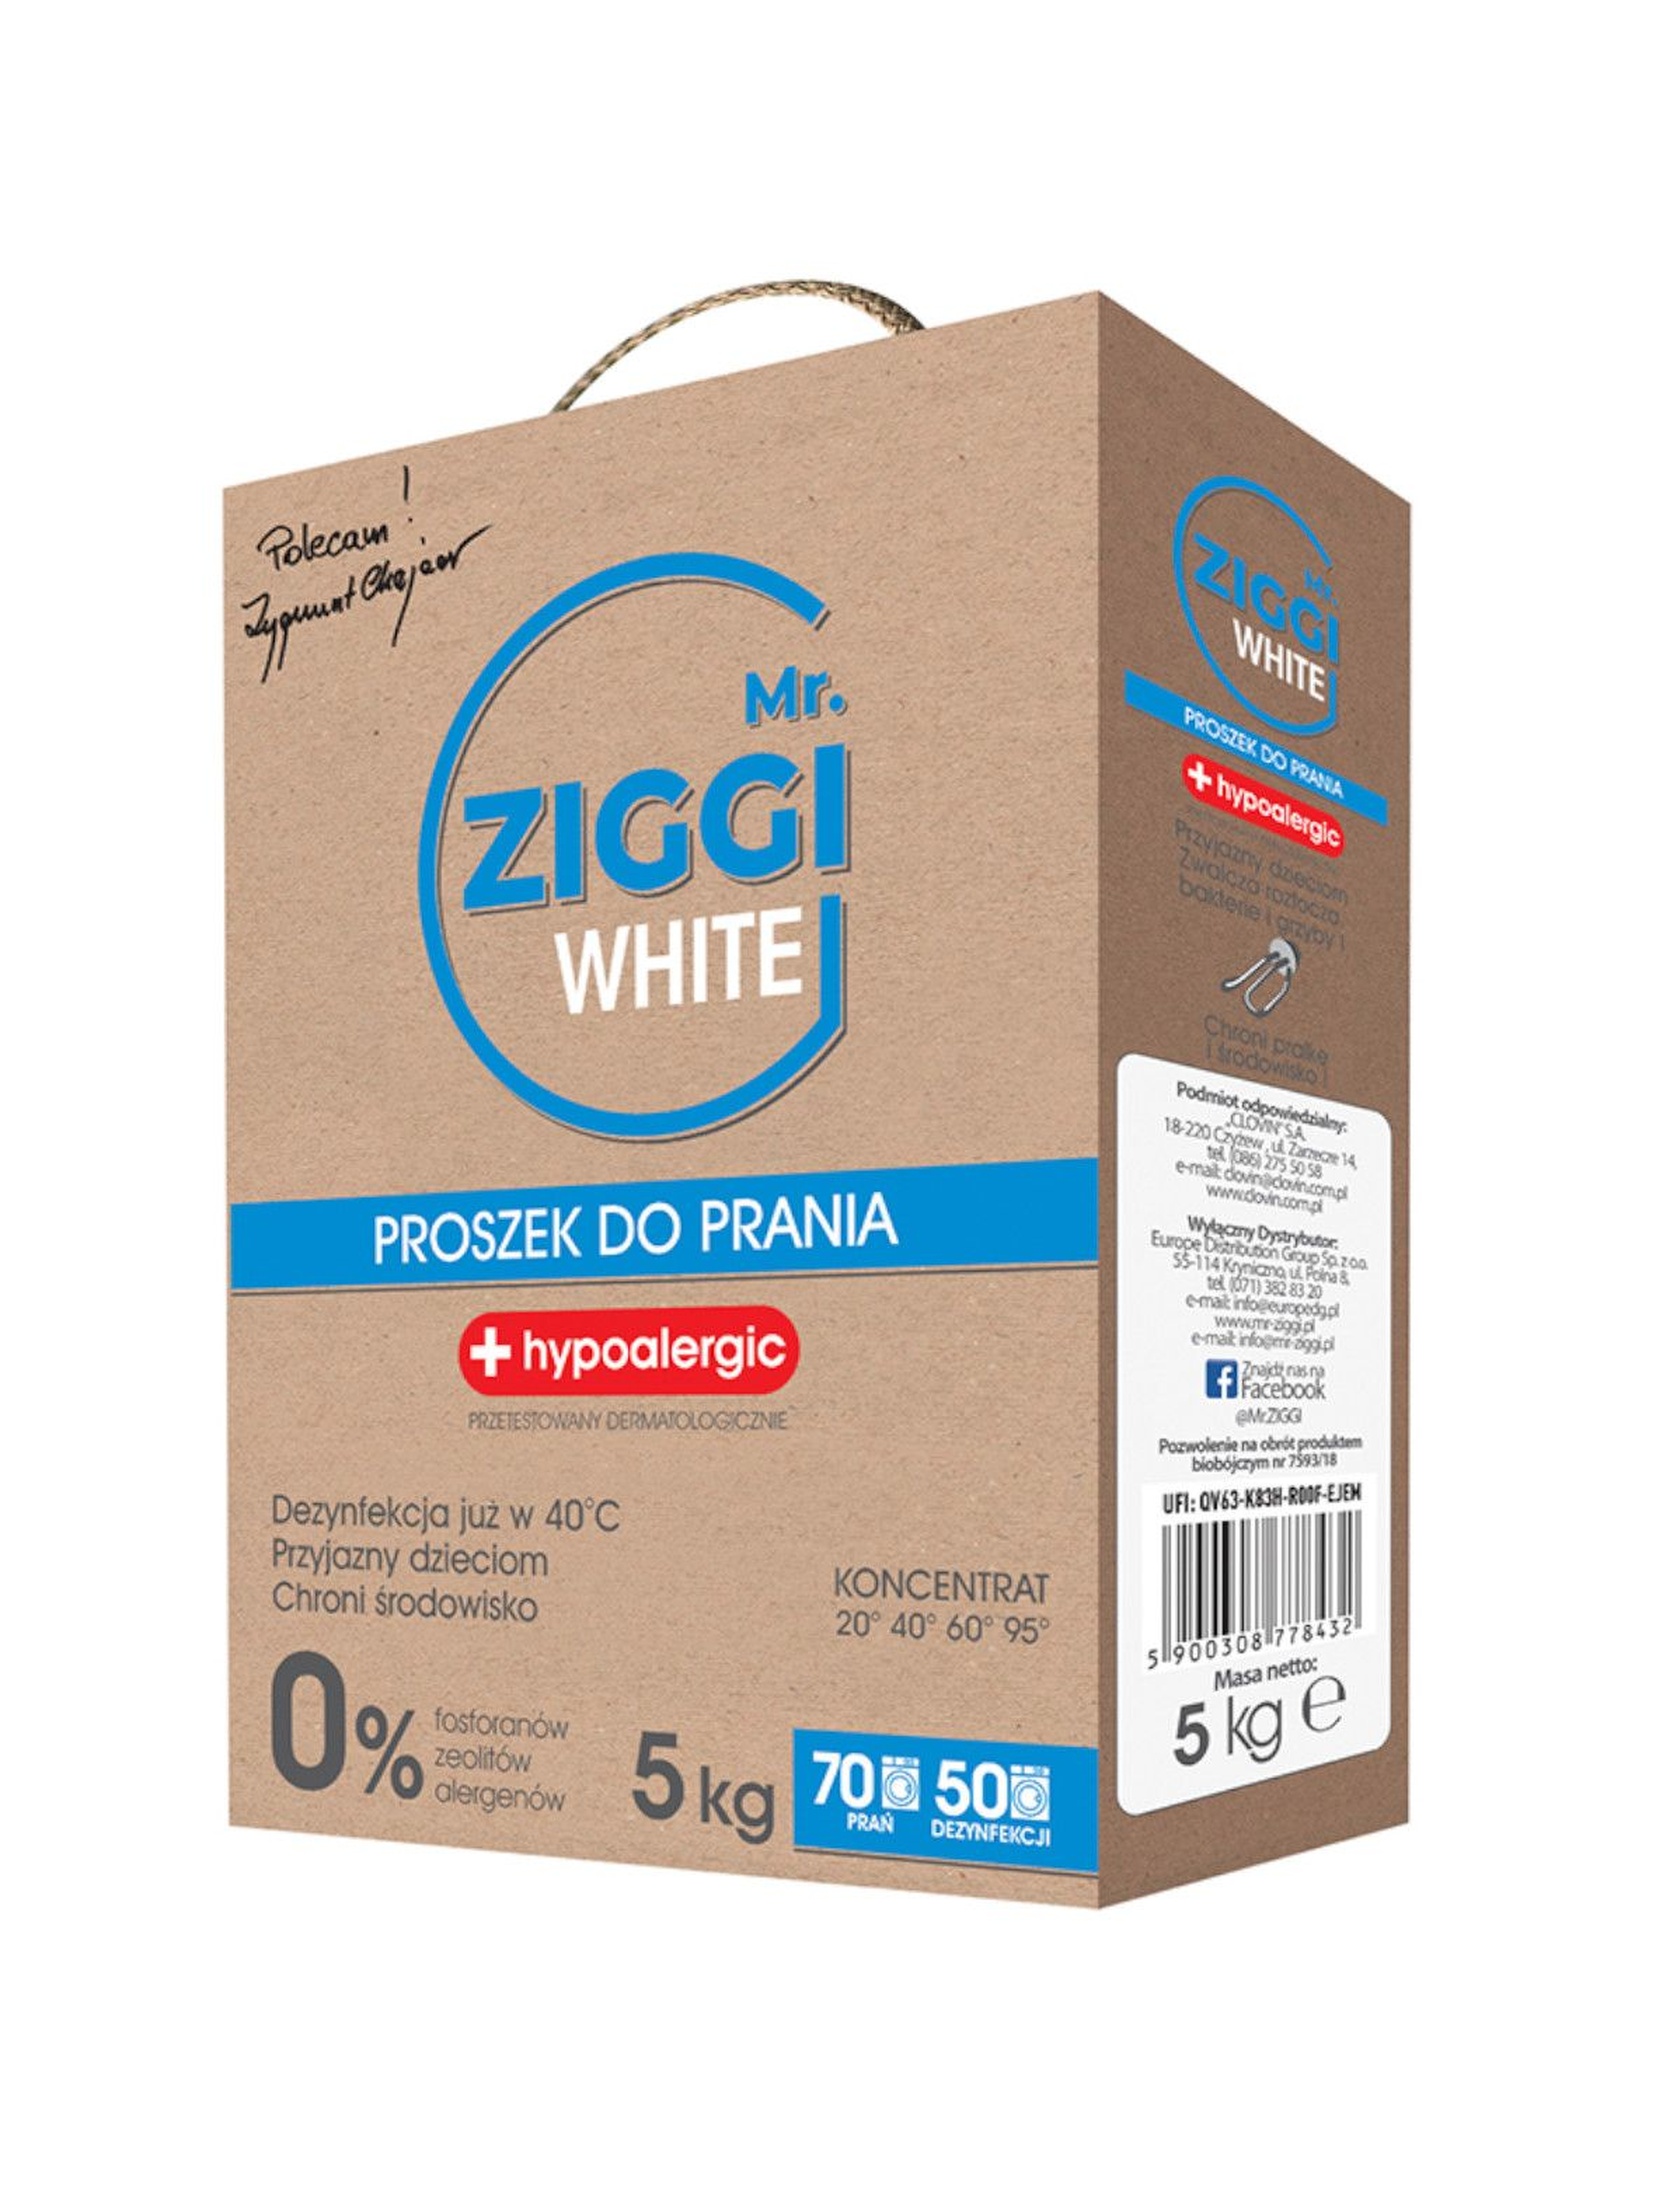 Proszek do prania Mr. ZIGGI White - karton 5kg